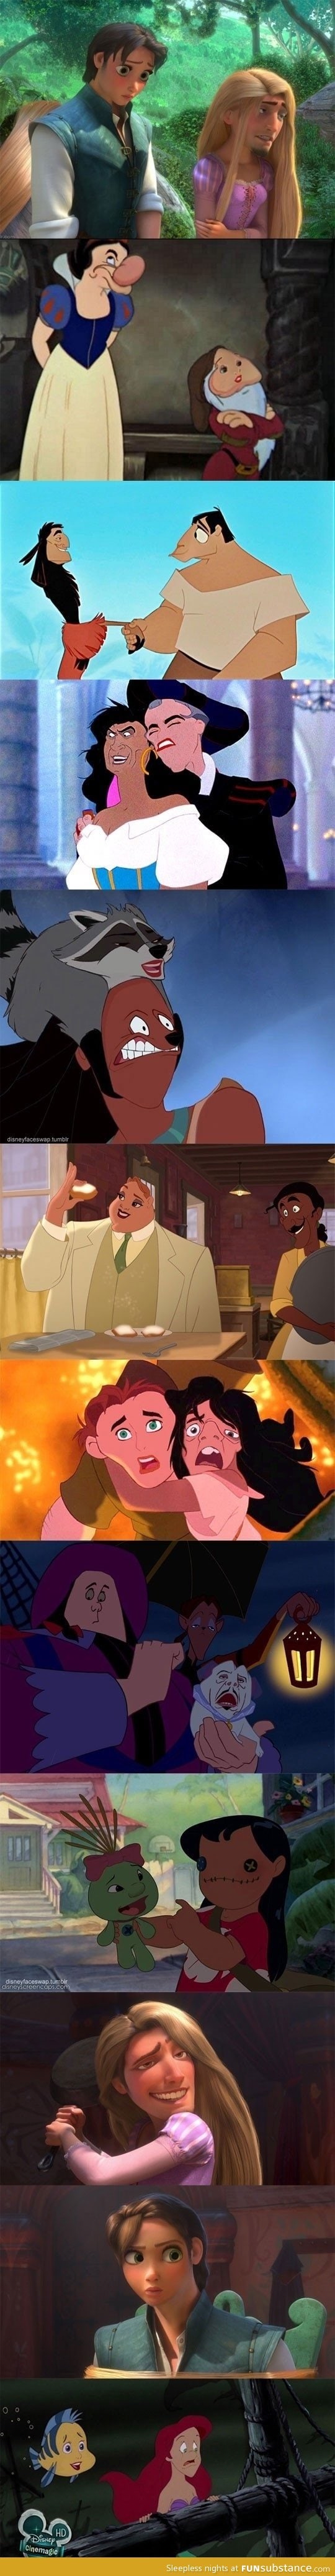 Disney face swaps get awkward